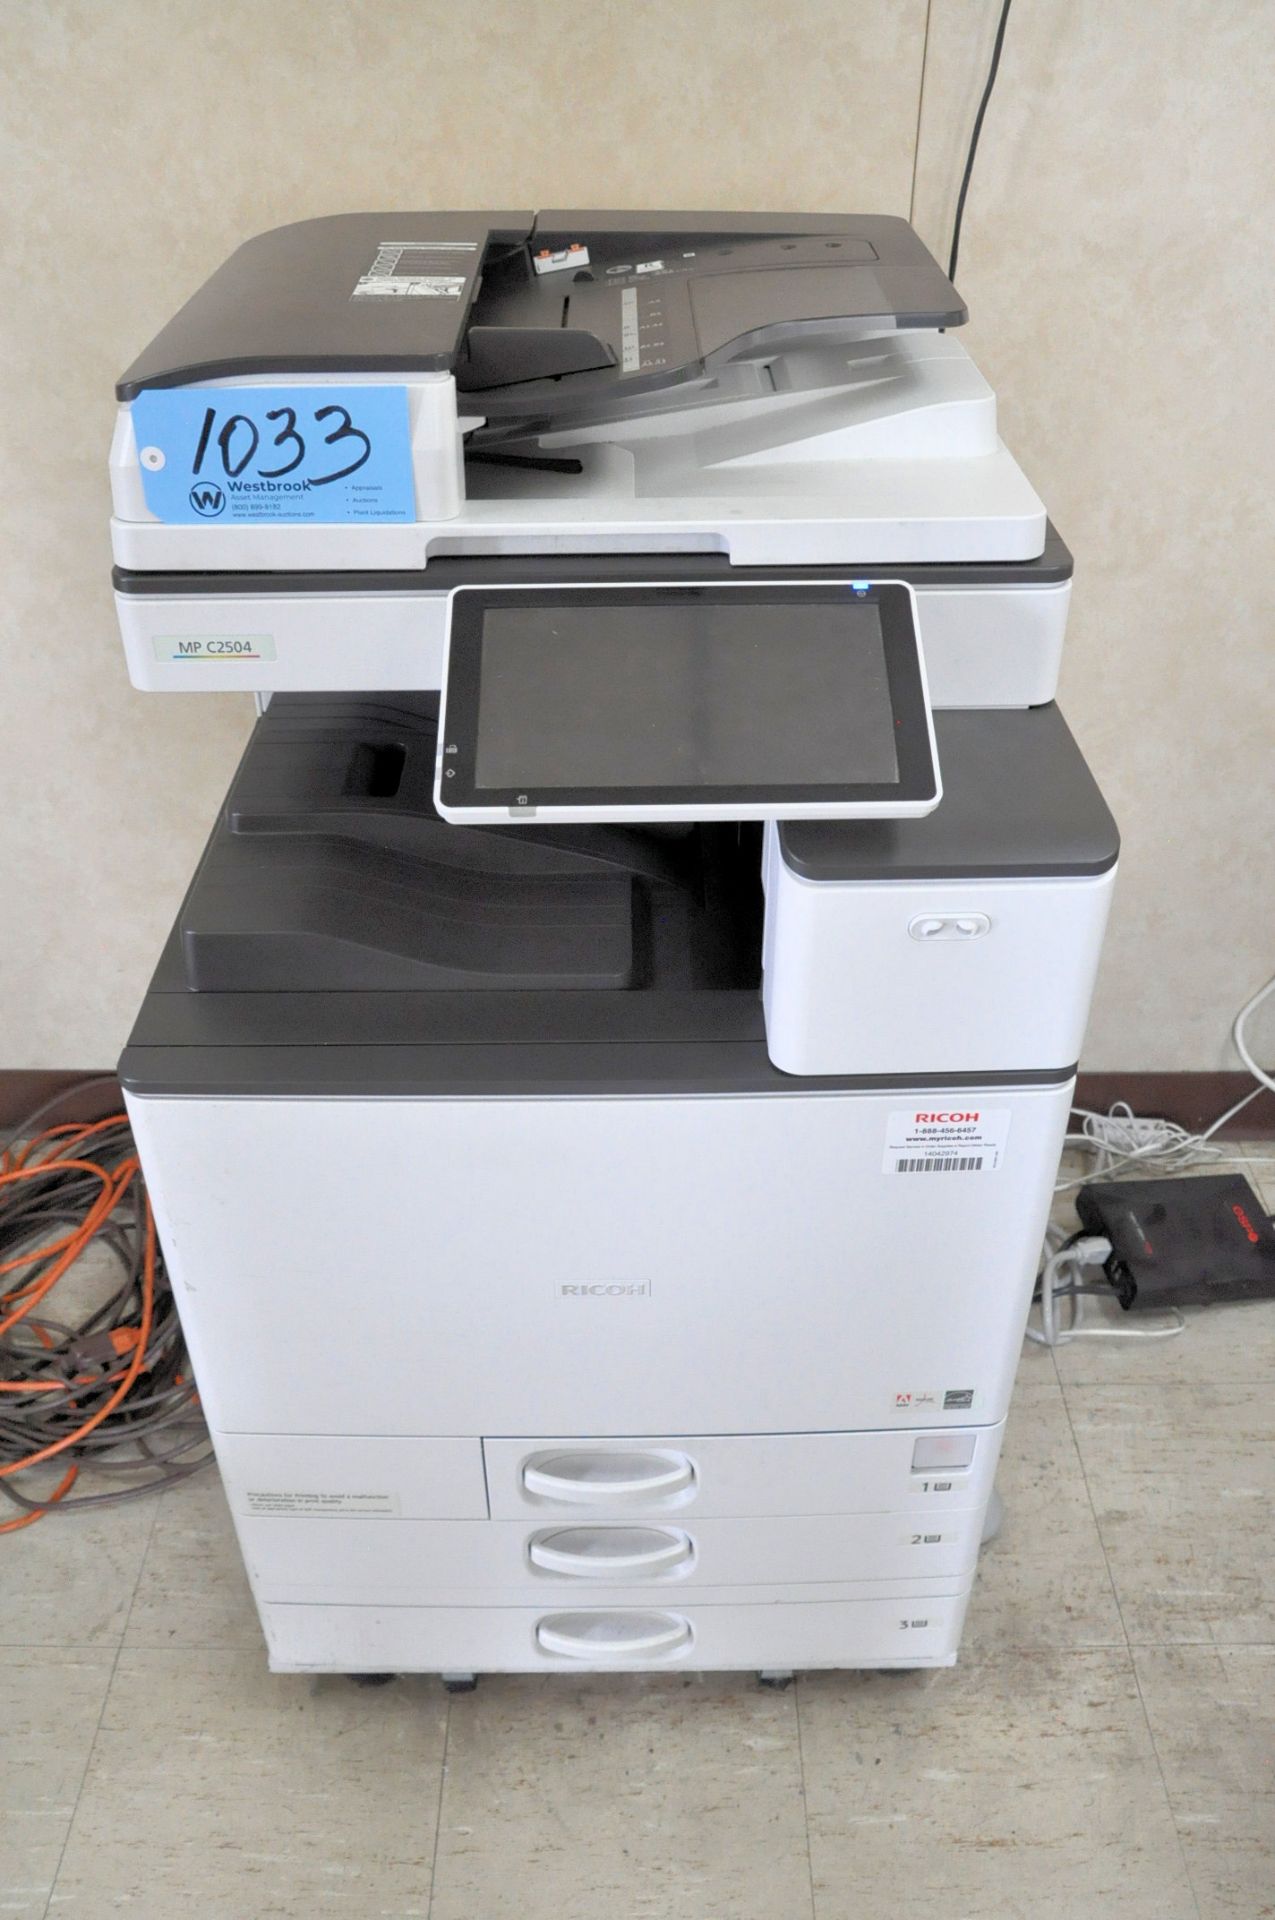 Ricoh MP C2504 Multifunction Copier Machine